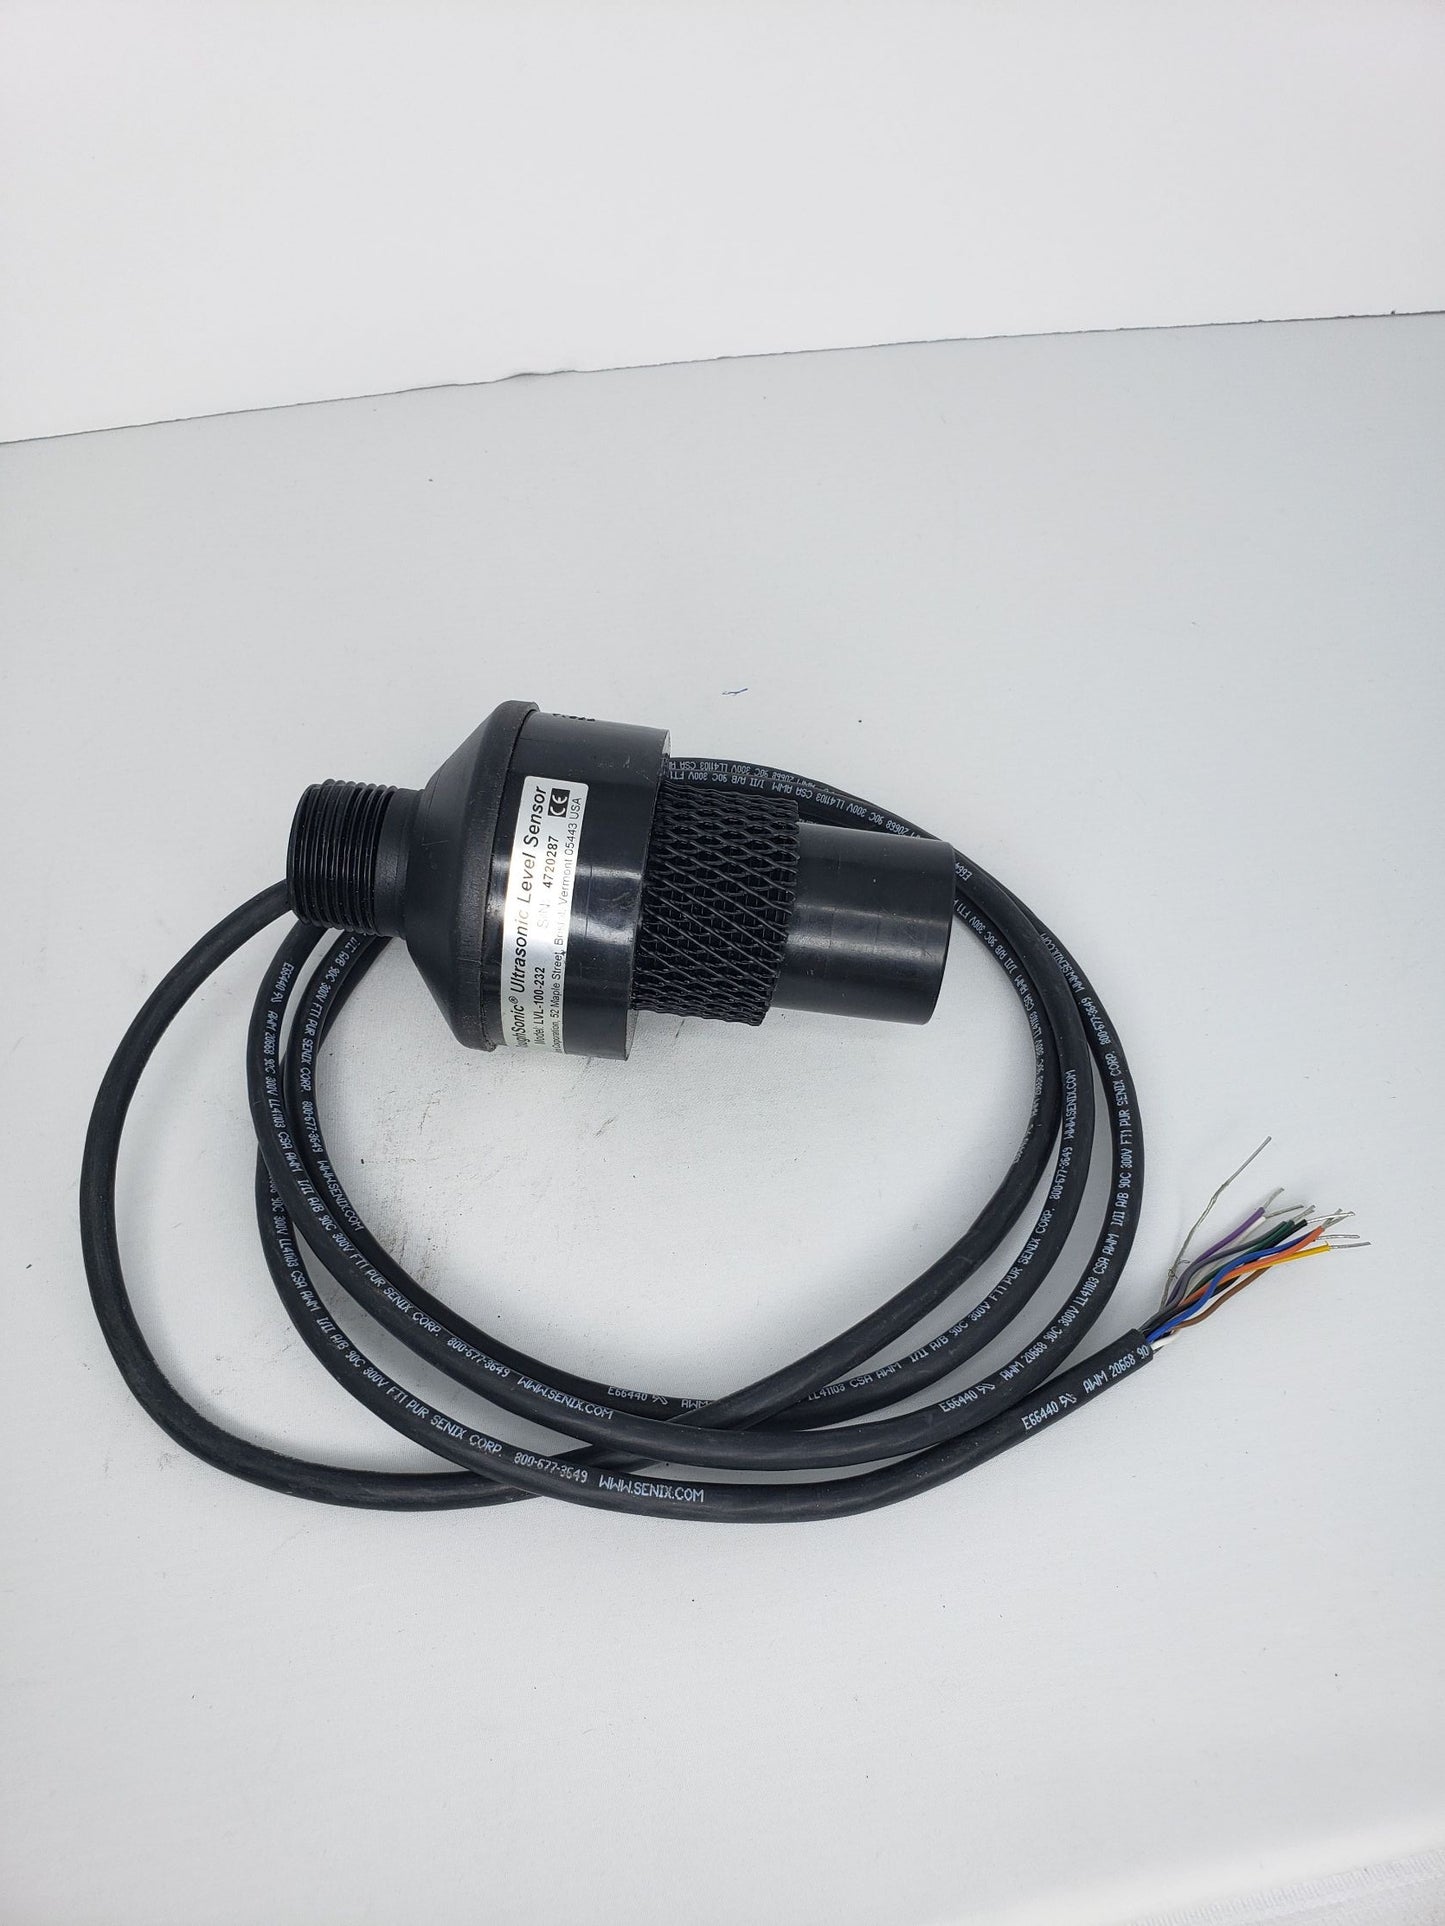 SENIX LVL-100-232 Ultrasonic Proximity Distance Sensor NEW